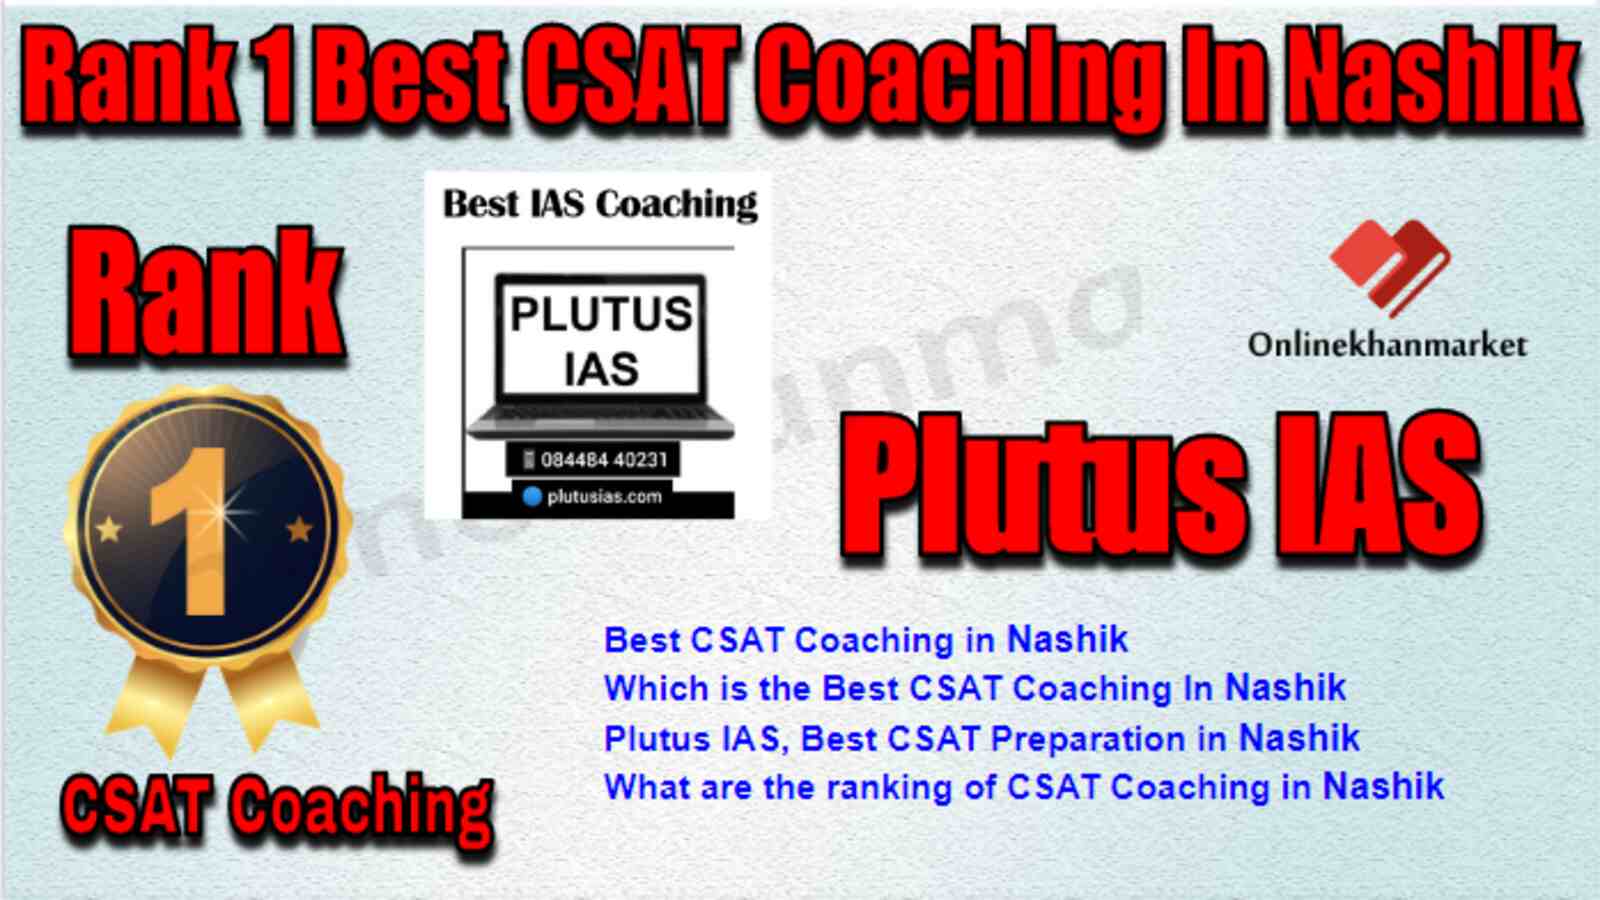 Rank 1 Best CSAT Coaching in Nashik